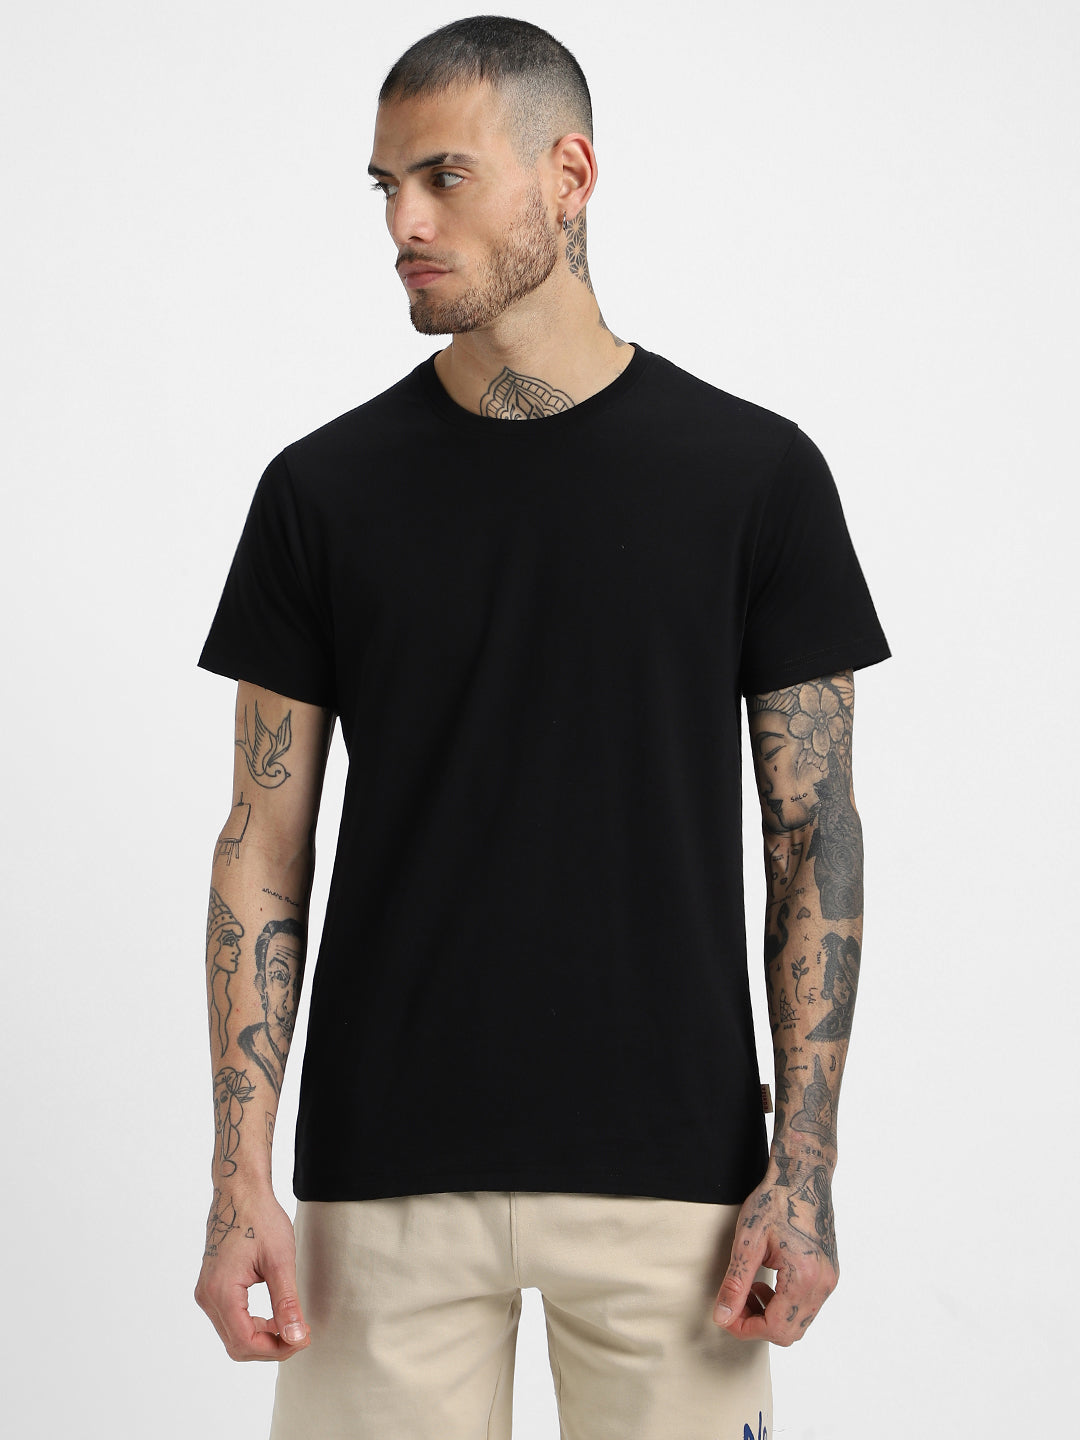 Black Solid Men's Tshirt